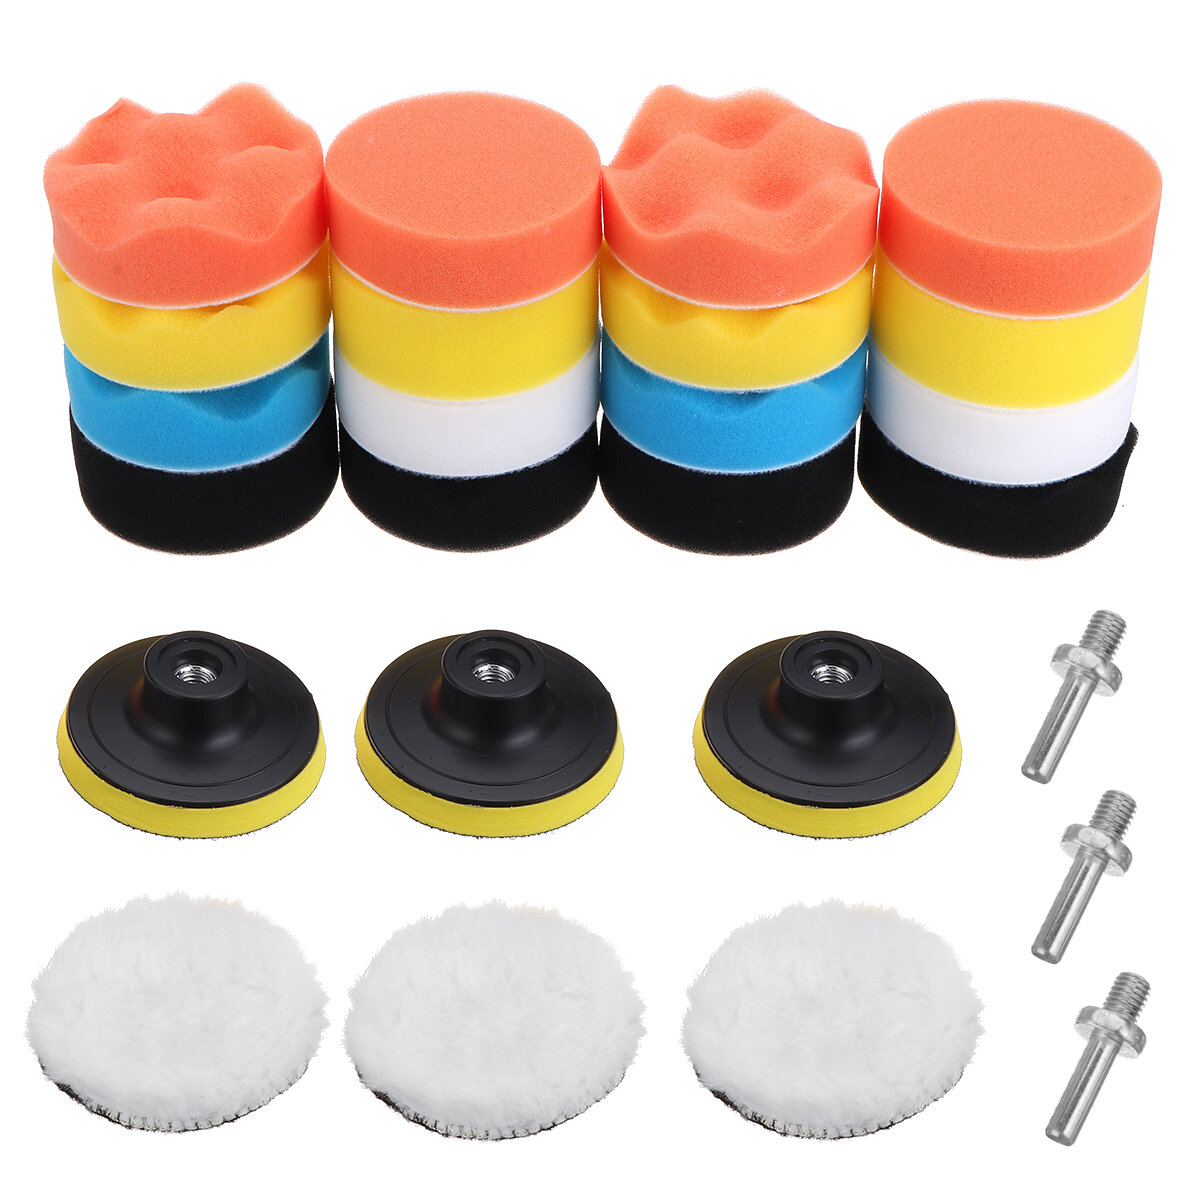 

25pcs 3 Inch Buffing Waxing Polishing Sponge Pads Kit Set For Car Polisher Drill